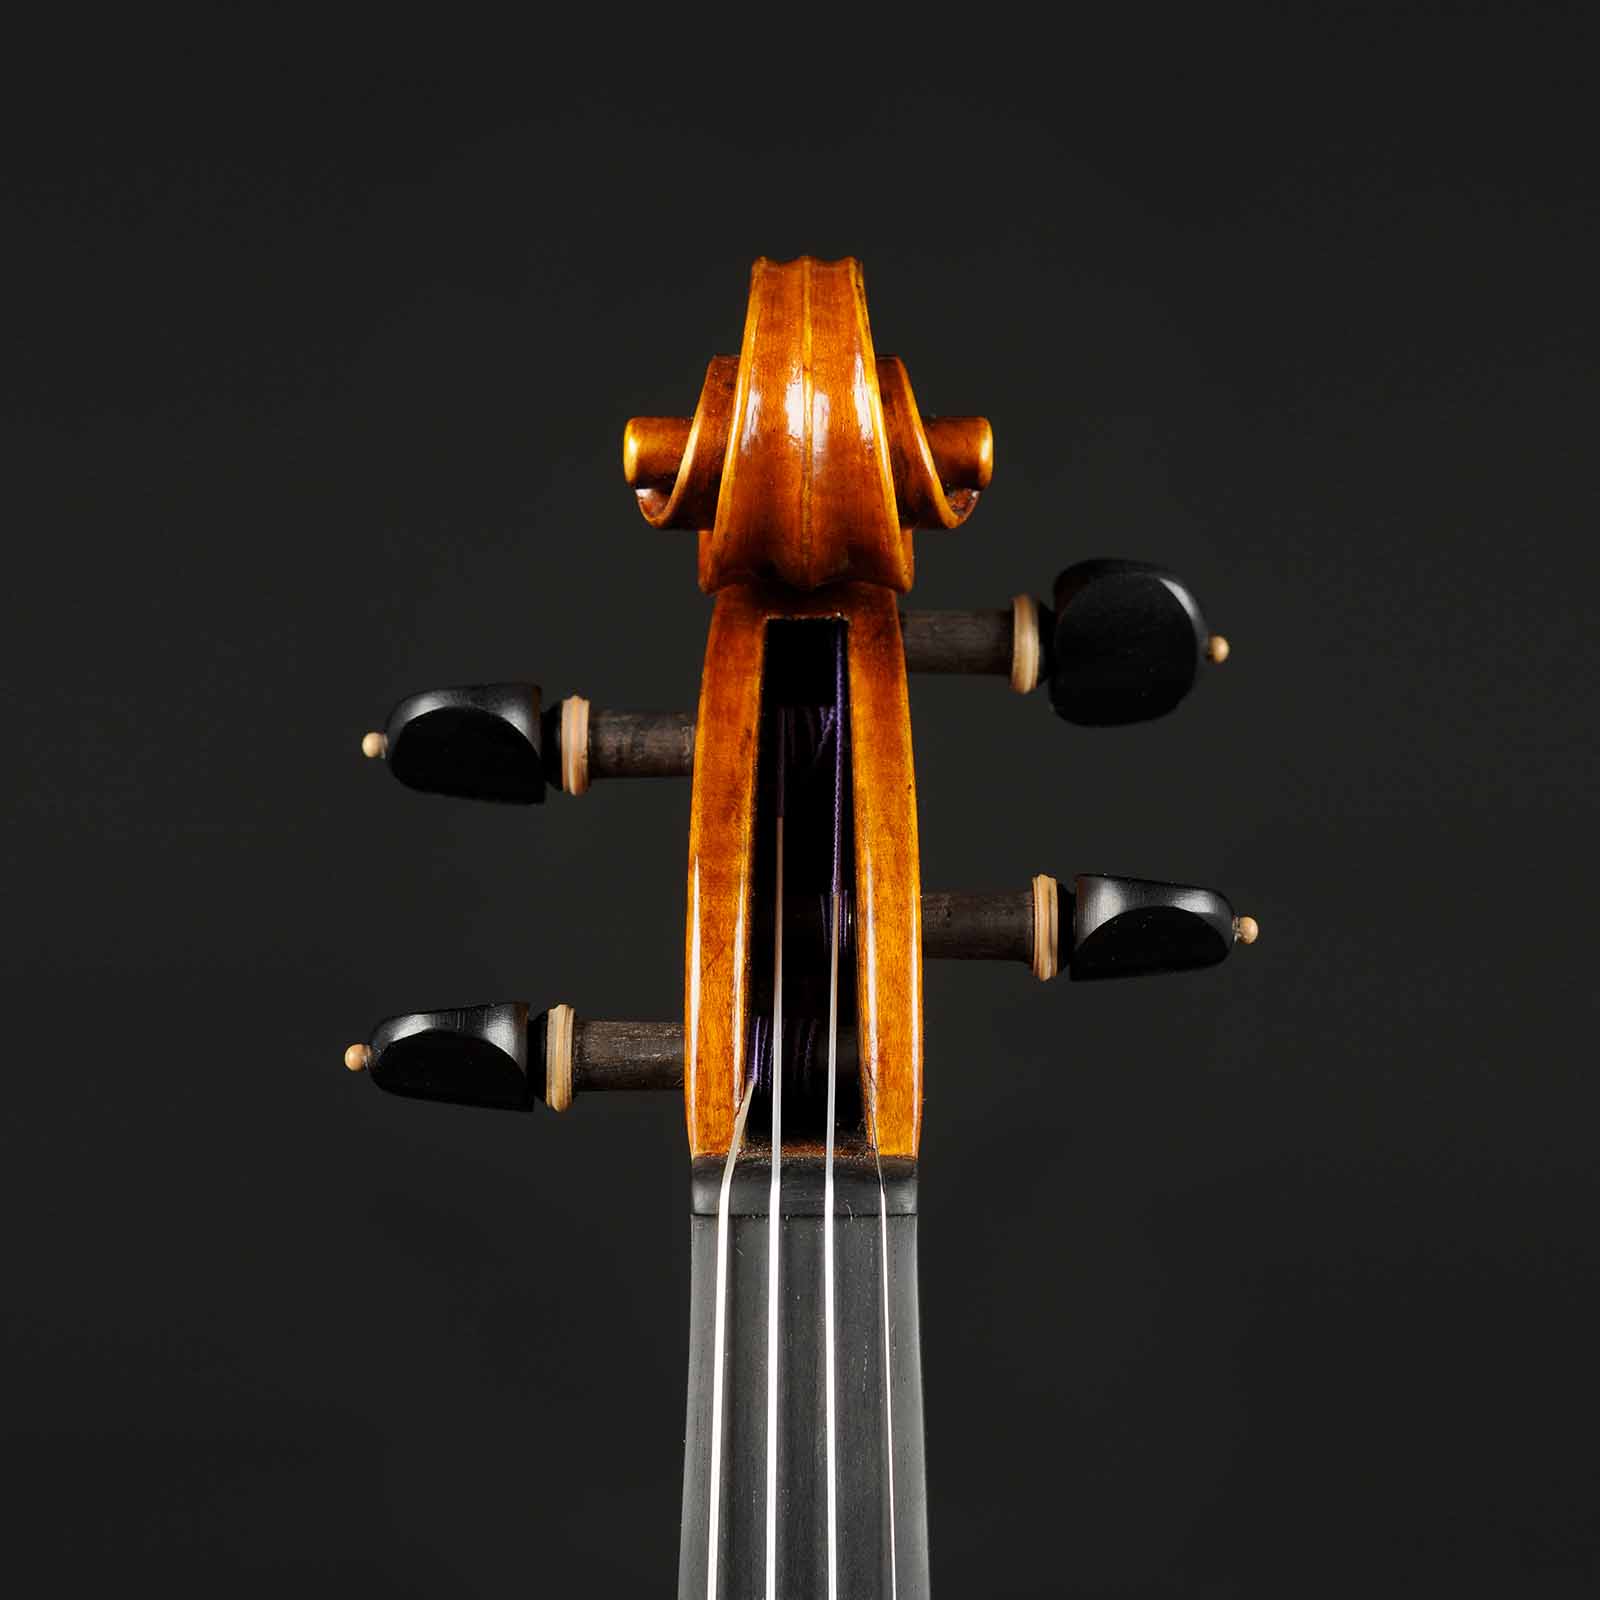 Antonio Stradivari Cremona 1717 “San Clemente“ - Image 7